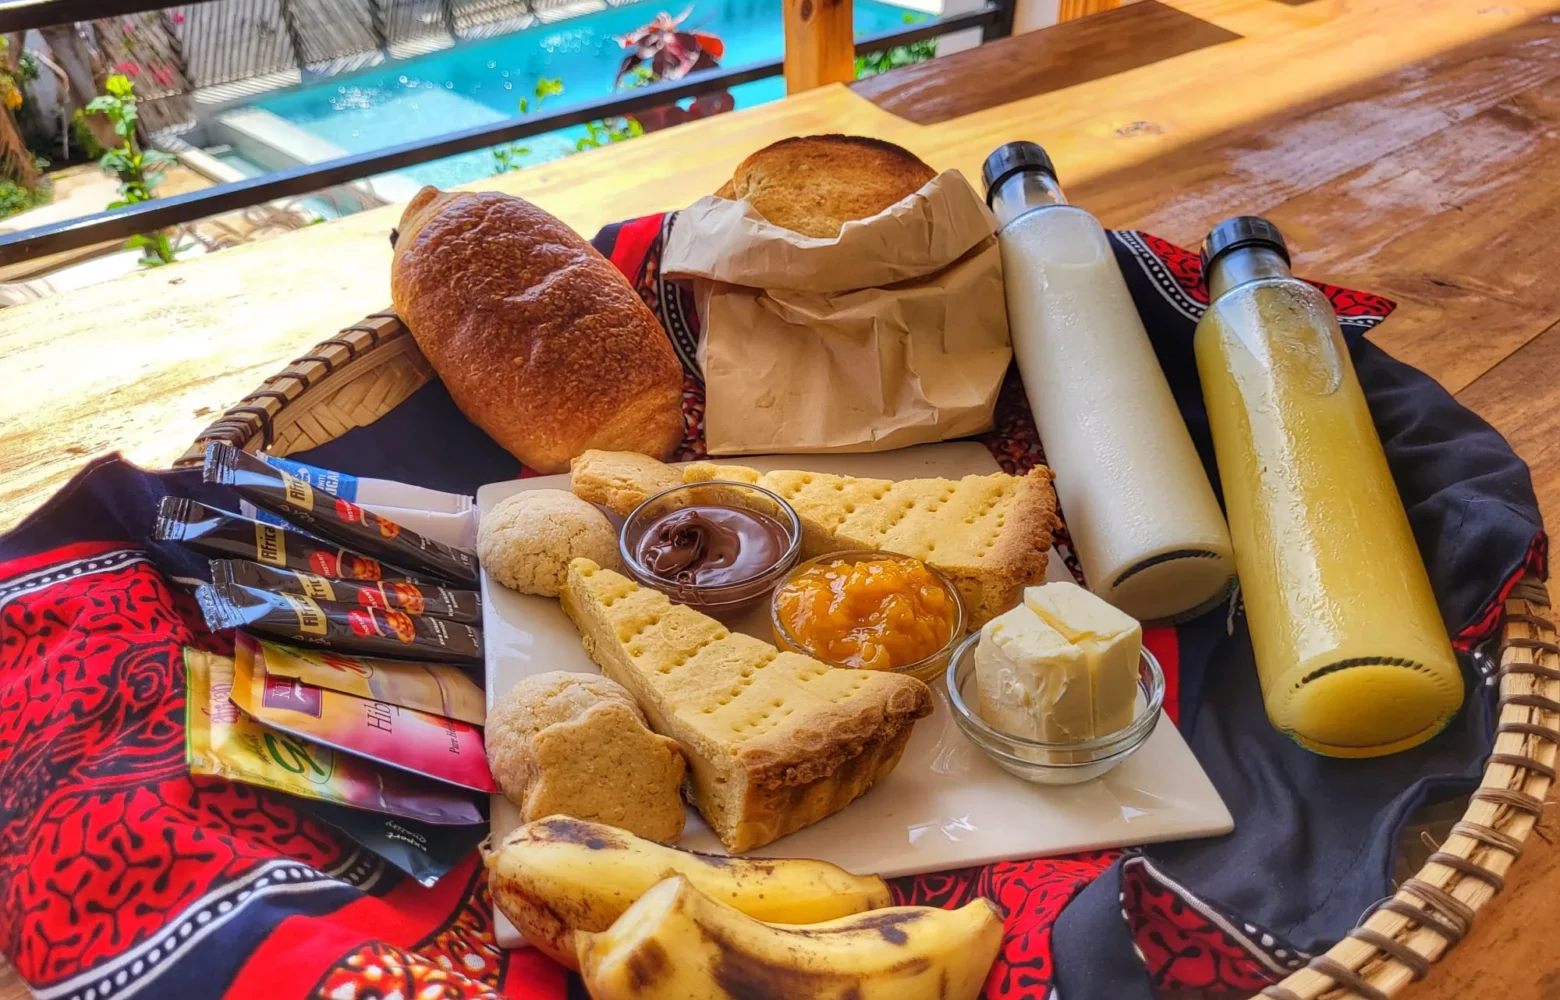 Our Zanzibar Group Nyumbani Residence continental breakfast basket with food and drinks